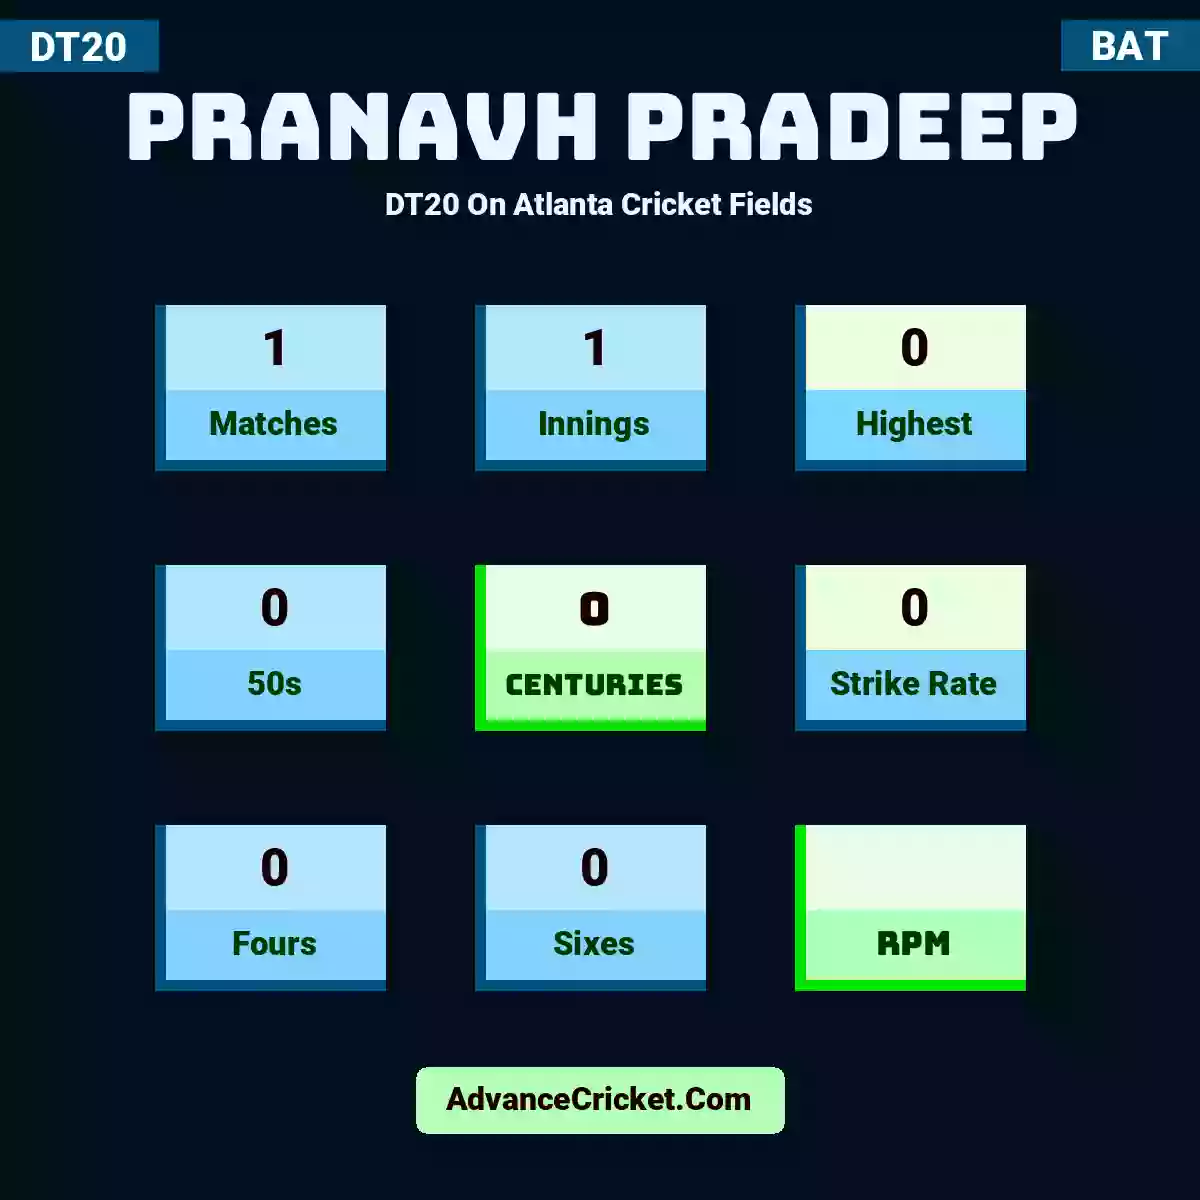 Pranavh Pradeep DT20  On Atlanta Cricket Fields, Pranavh Pradeep played 1 matches, scored 0 runs as highest, 0 half-centuries, and 0 centuries, with a strike rate of 0. P.Pradeep hit 0 fours and 0 sixes.